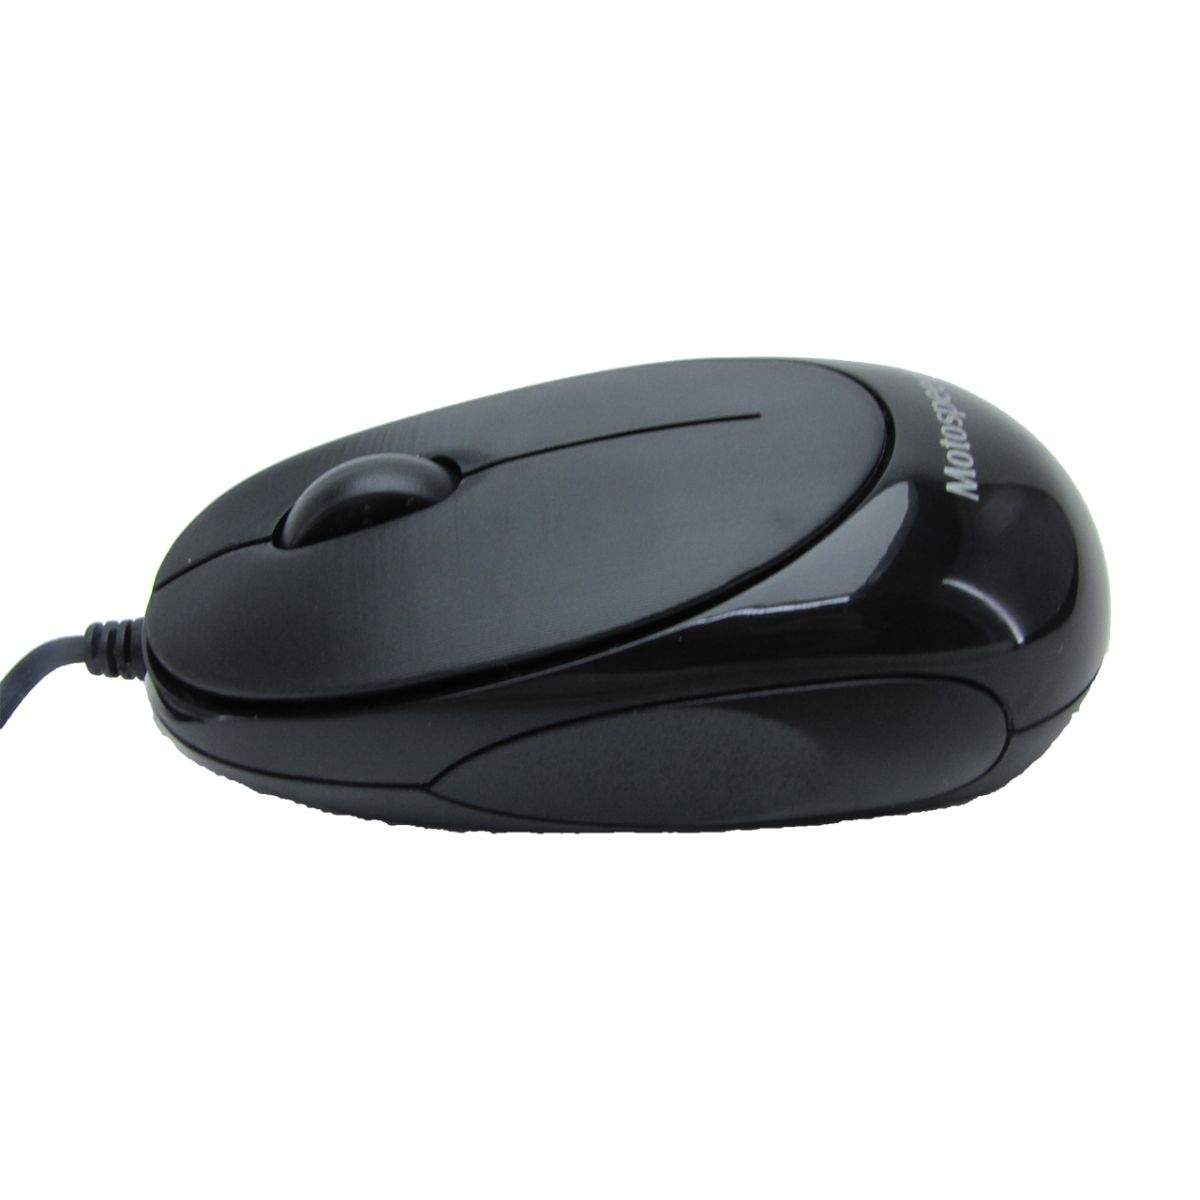 Mouse Óptico 3D F398 Motospeed